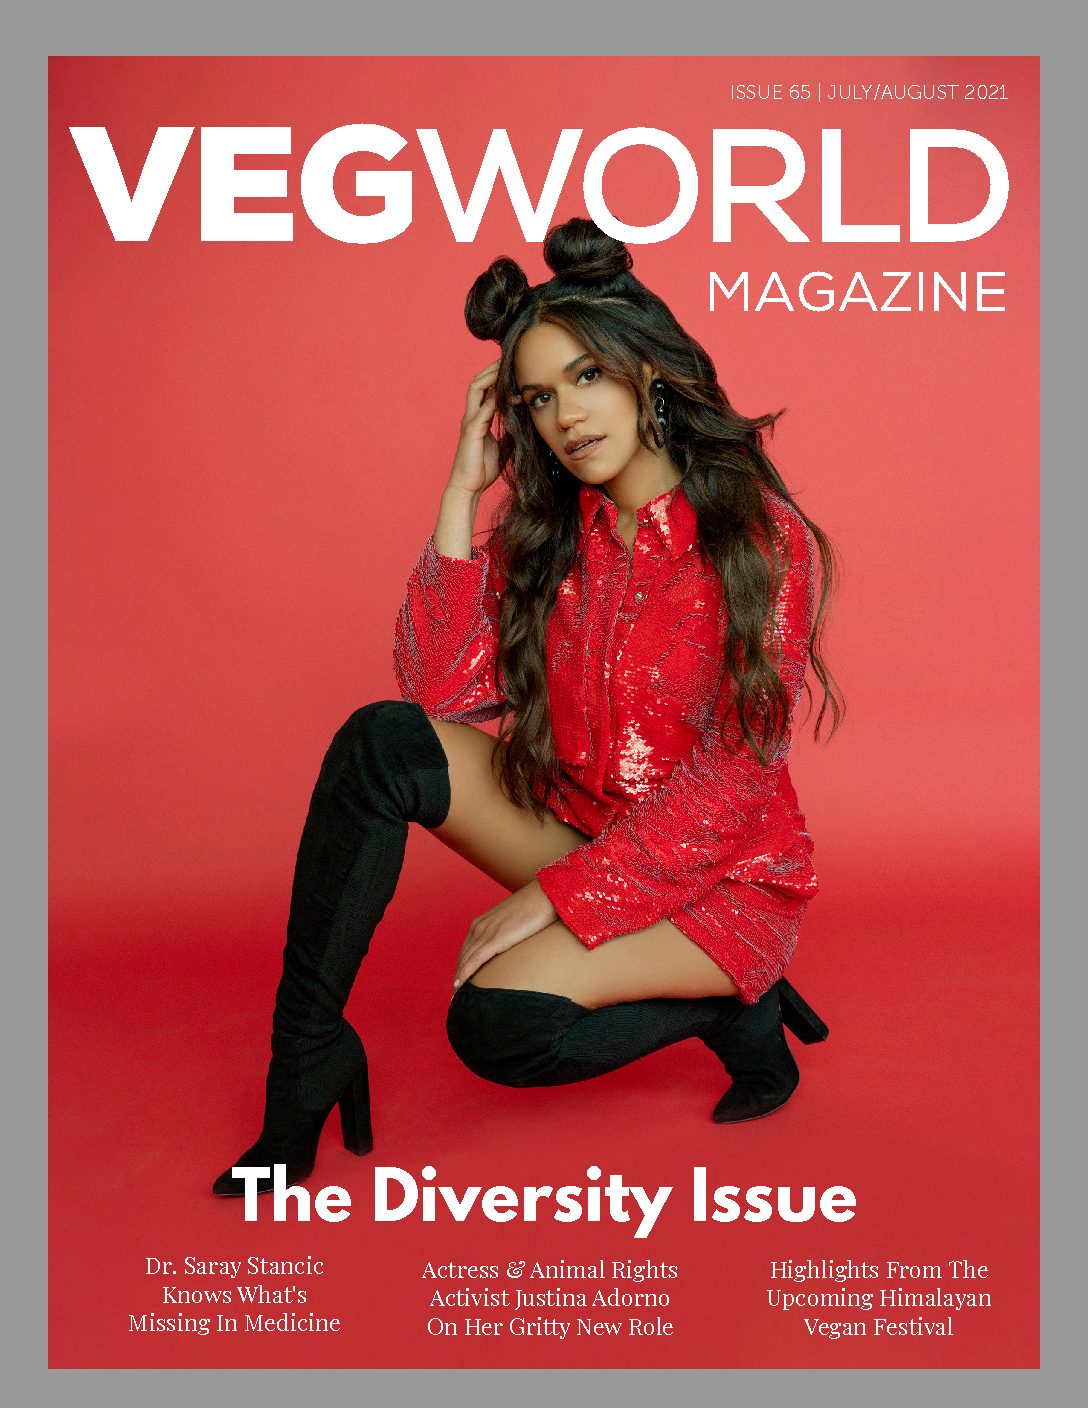 The Diversity Issue • VEGWORLD 65